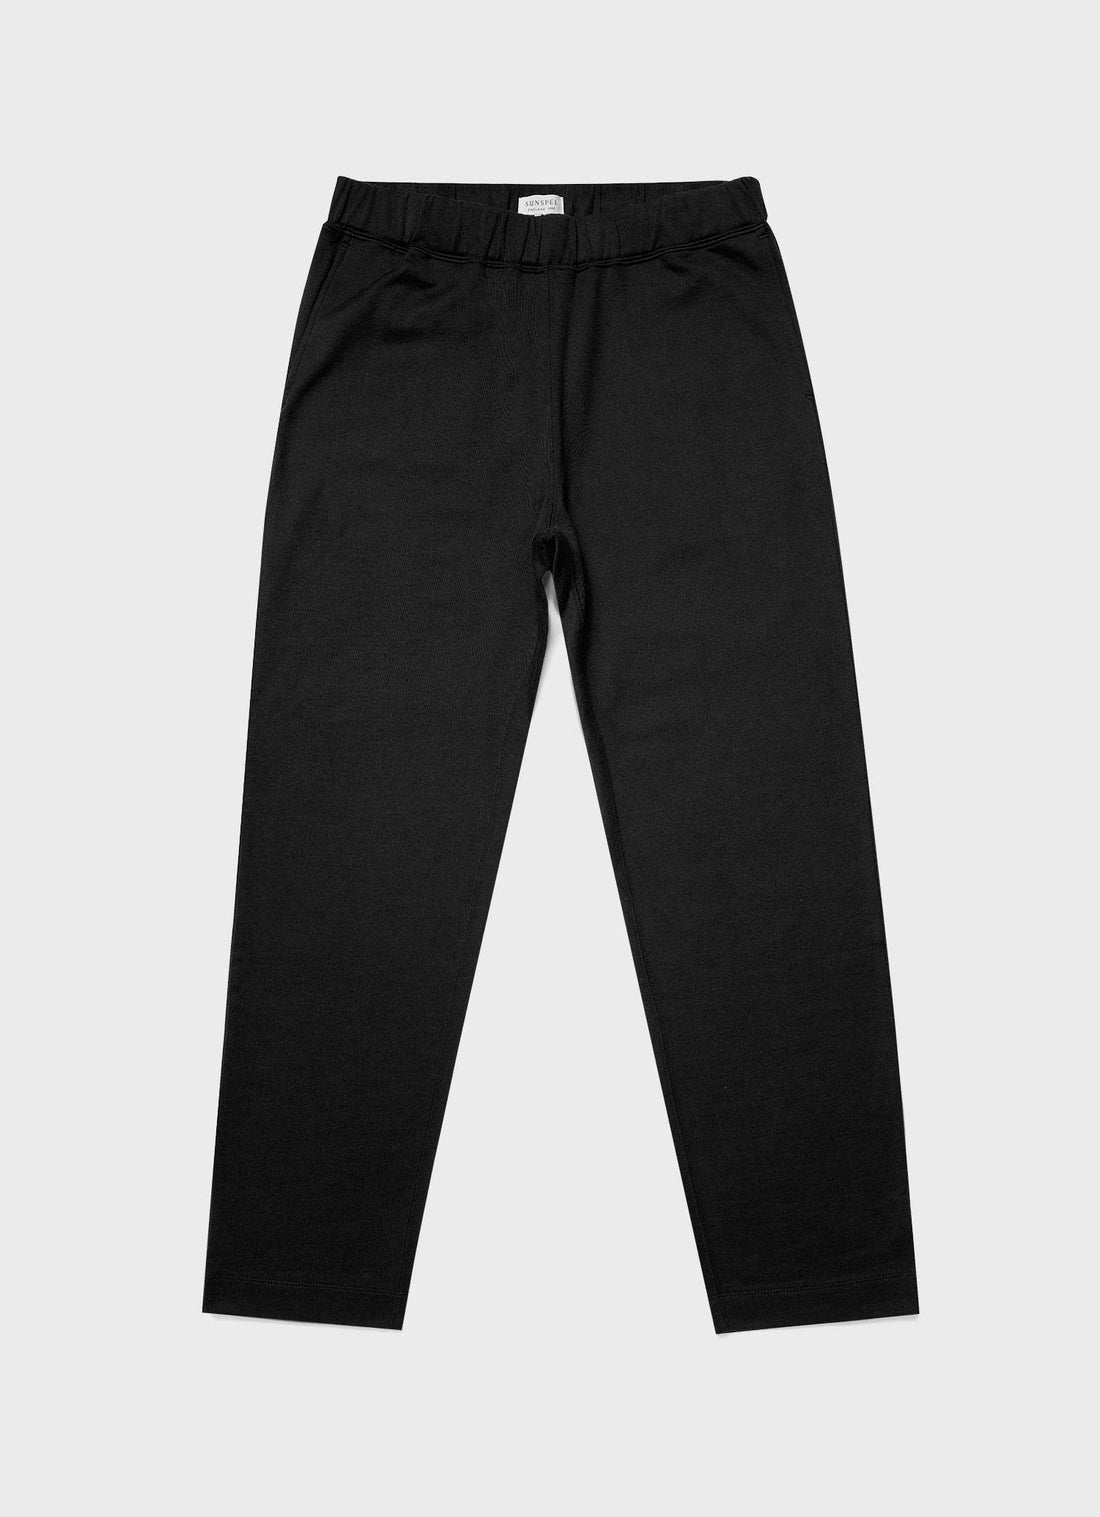 Men's Sea Island Sweatpants in Black